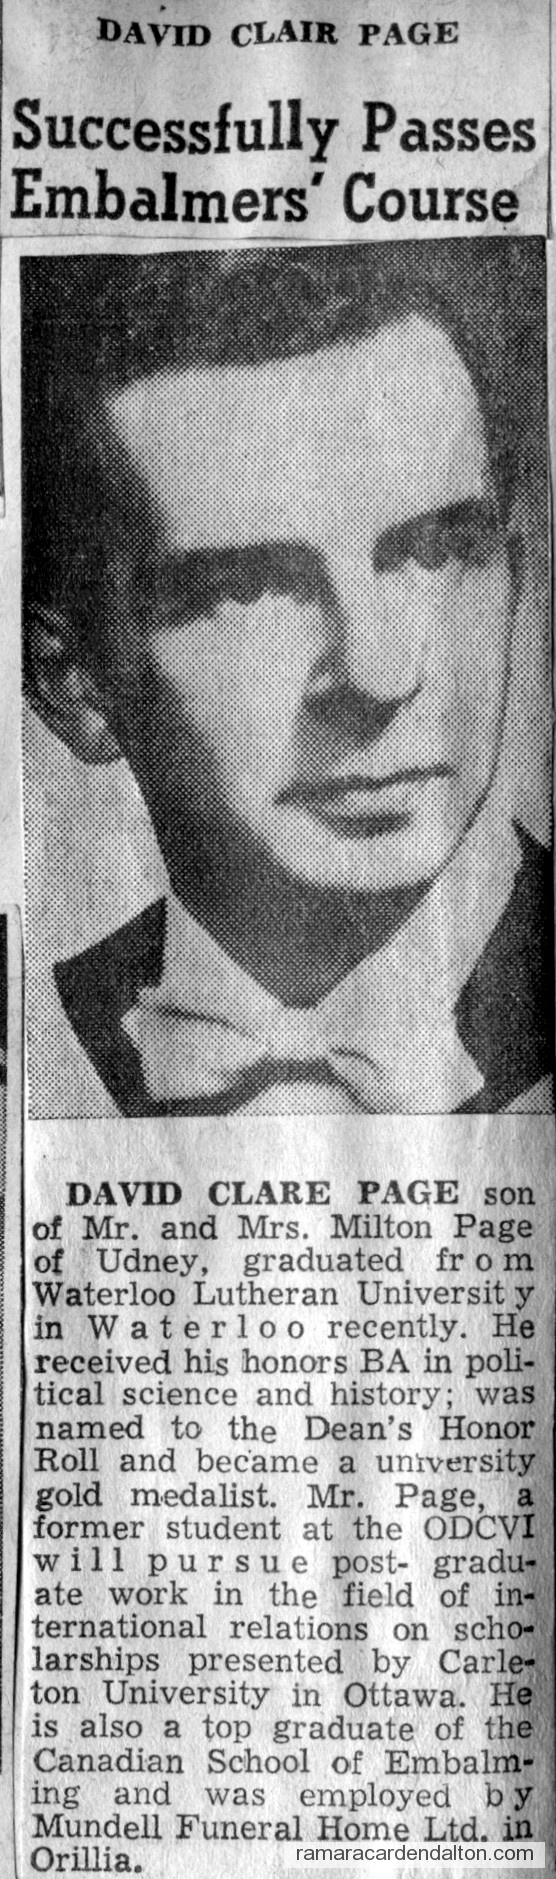 David Clare Page